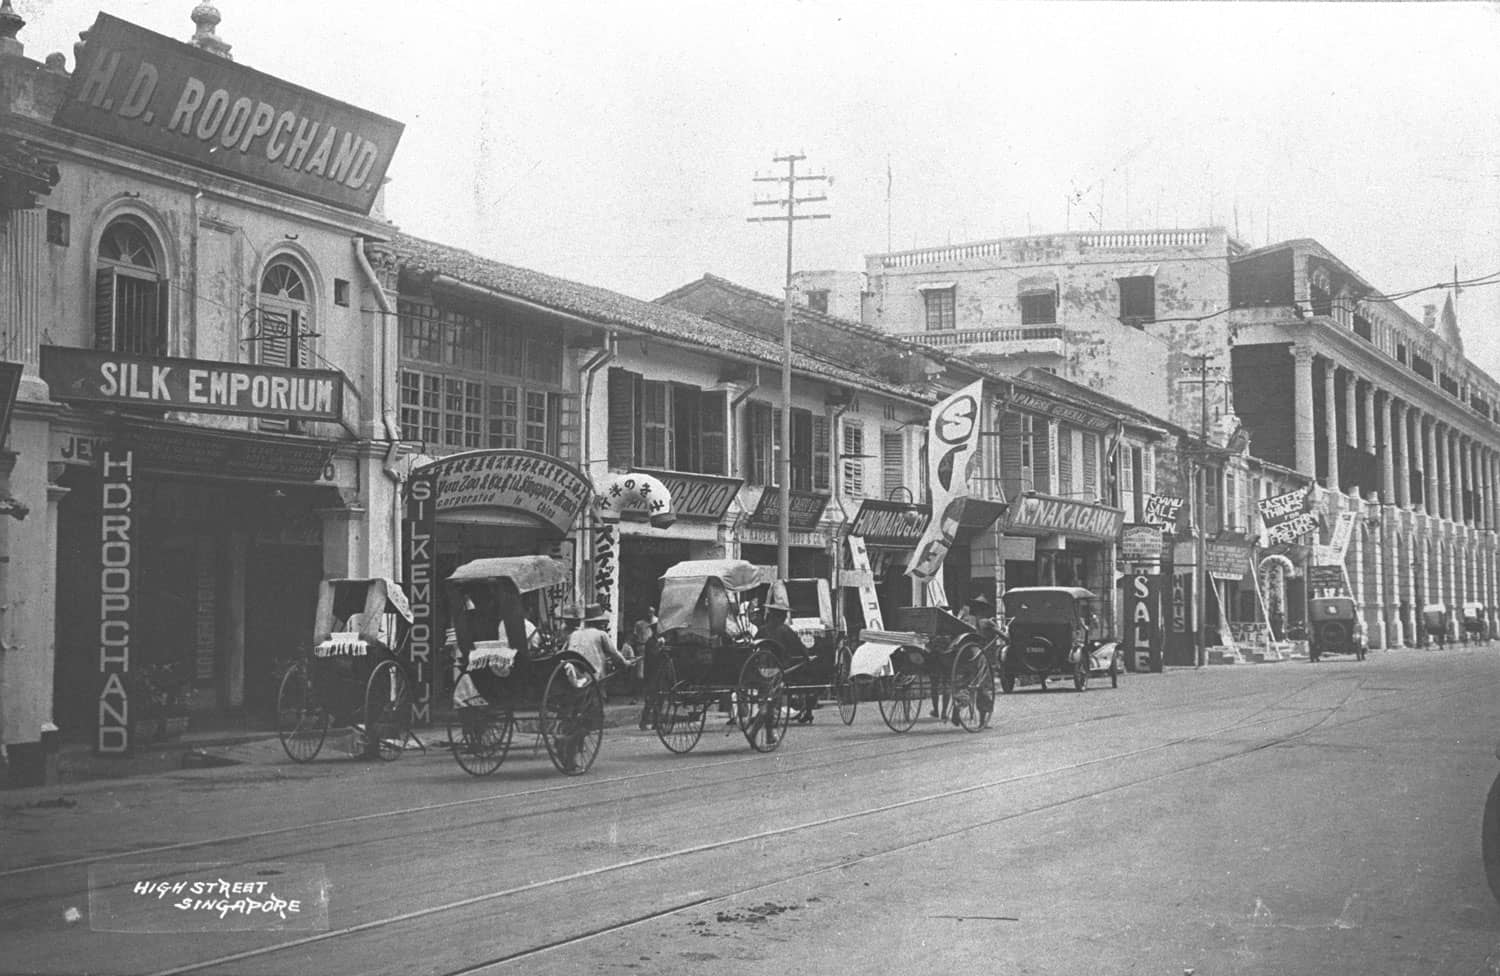 High Street, 1920s